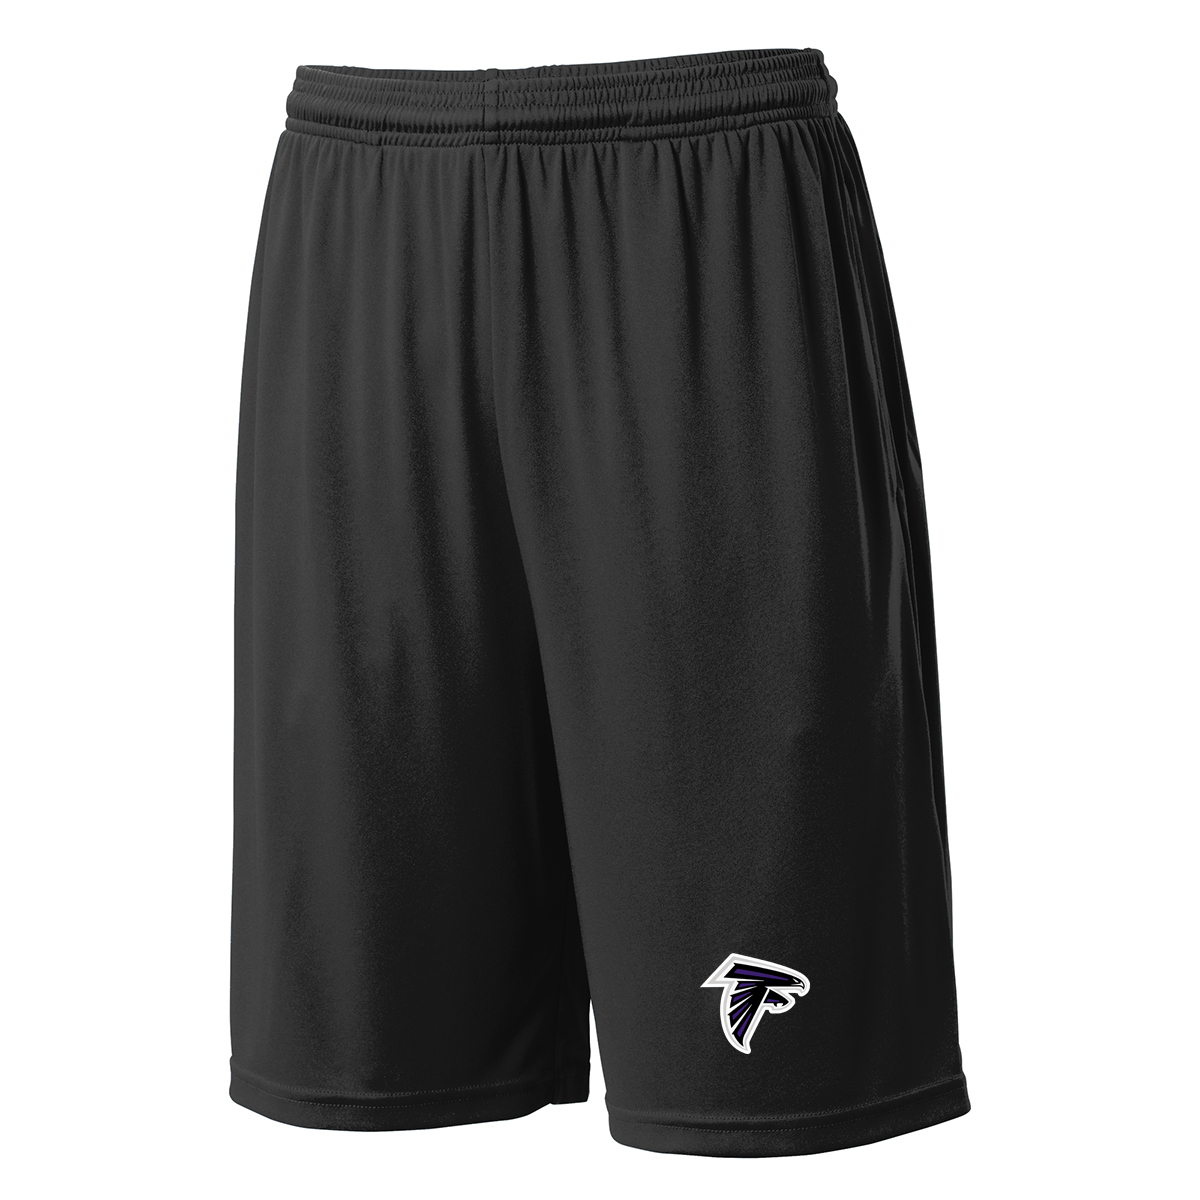 Lombard Falcons Shorts